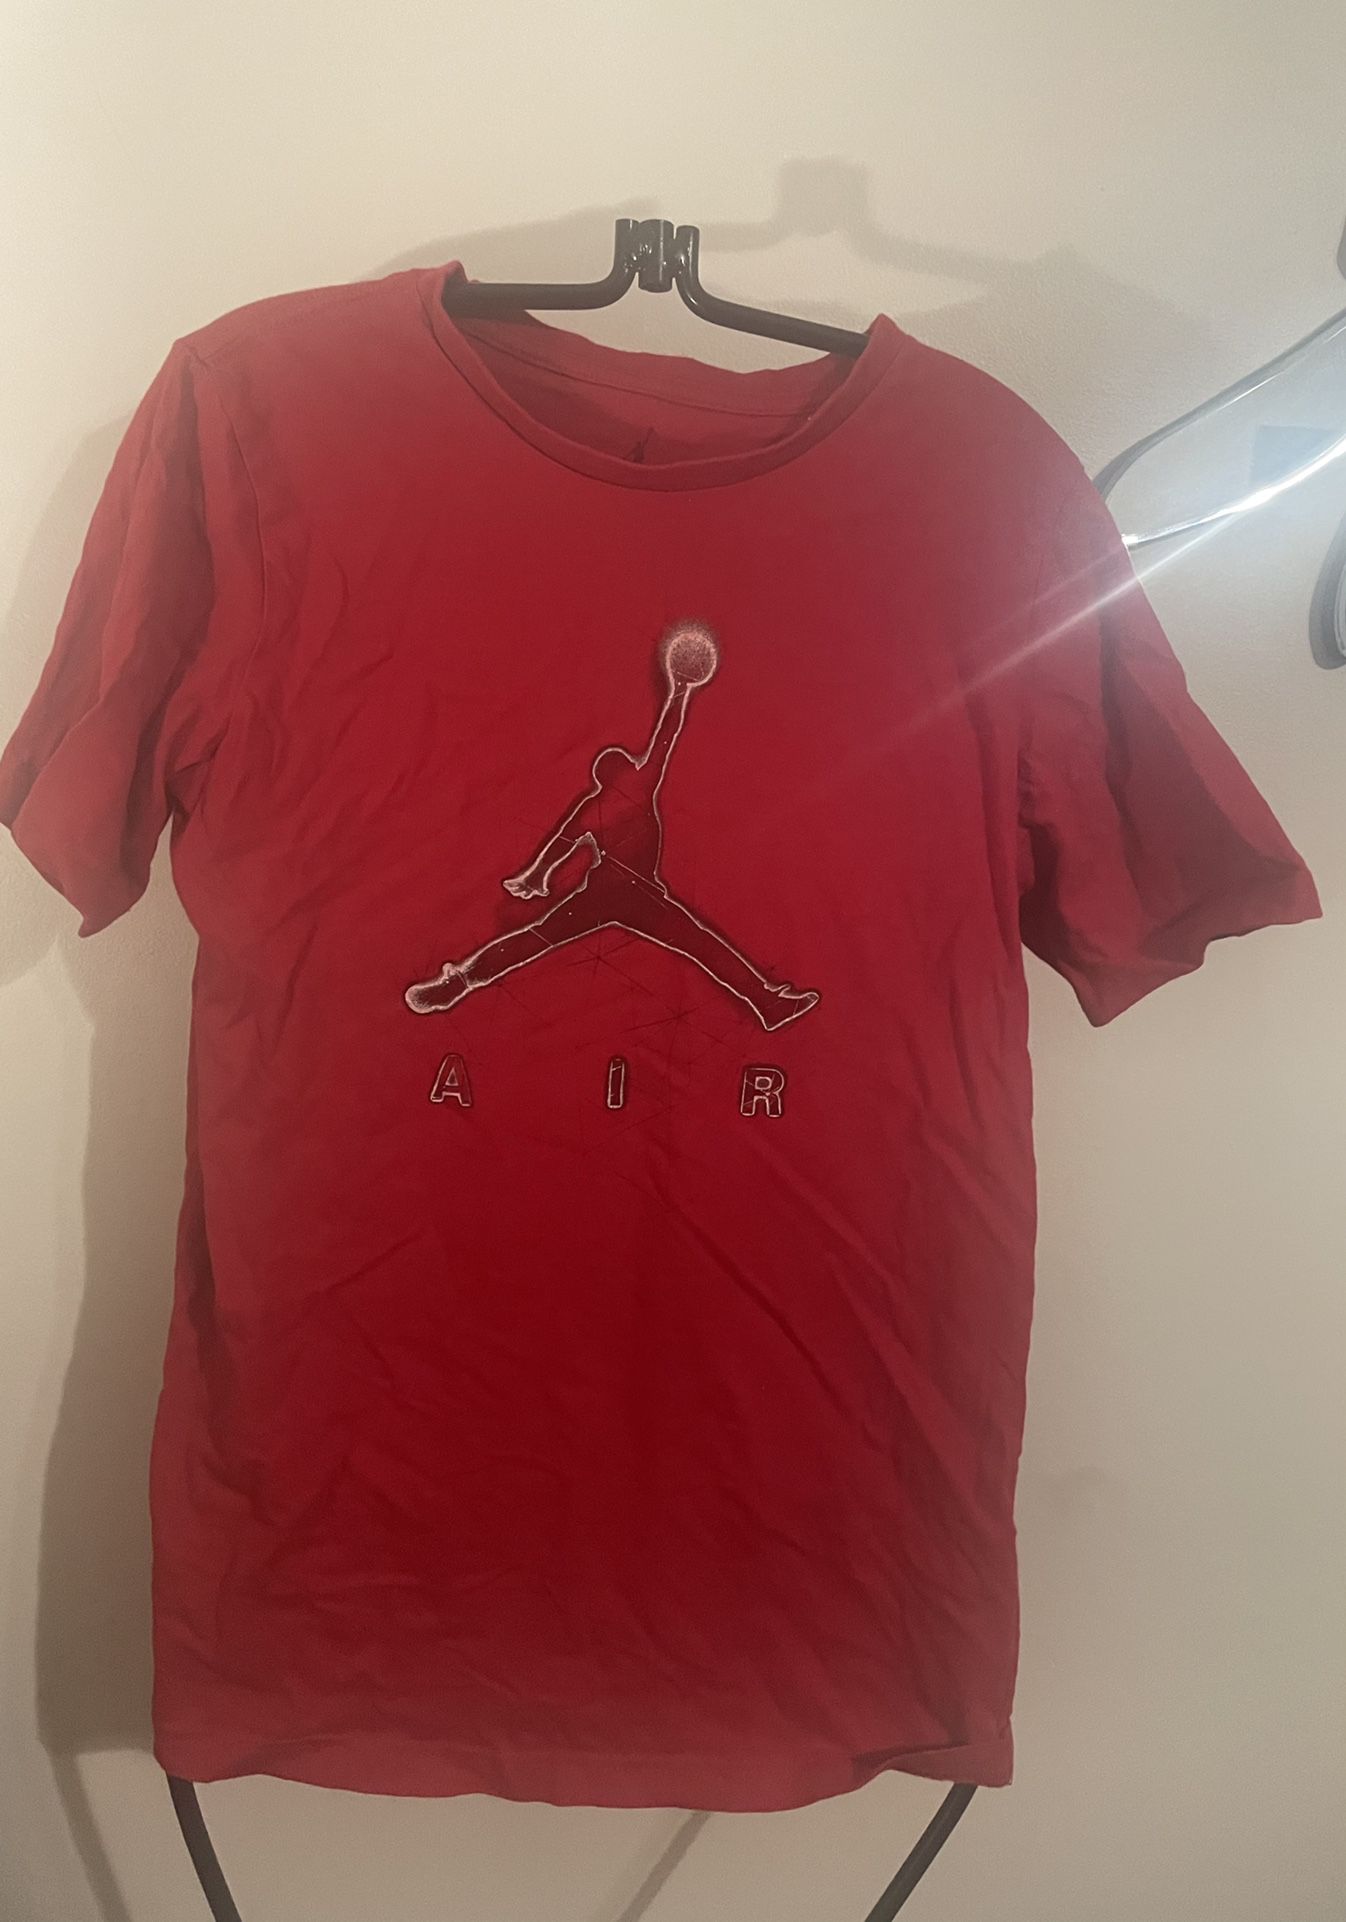 Nike Jordan Boys XL Red T-shirt